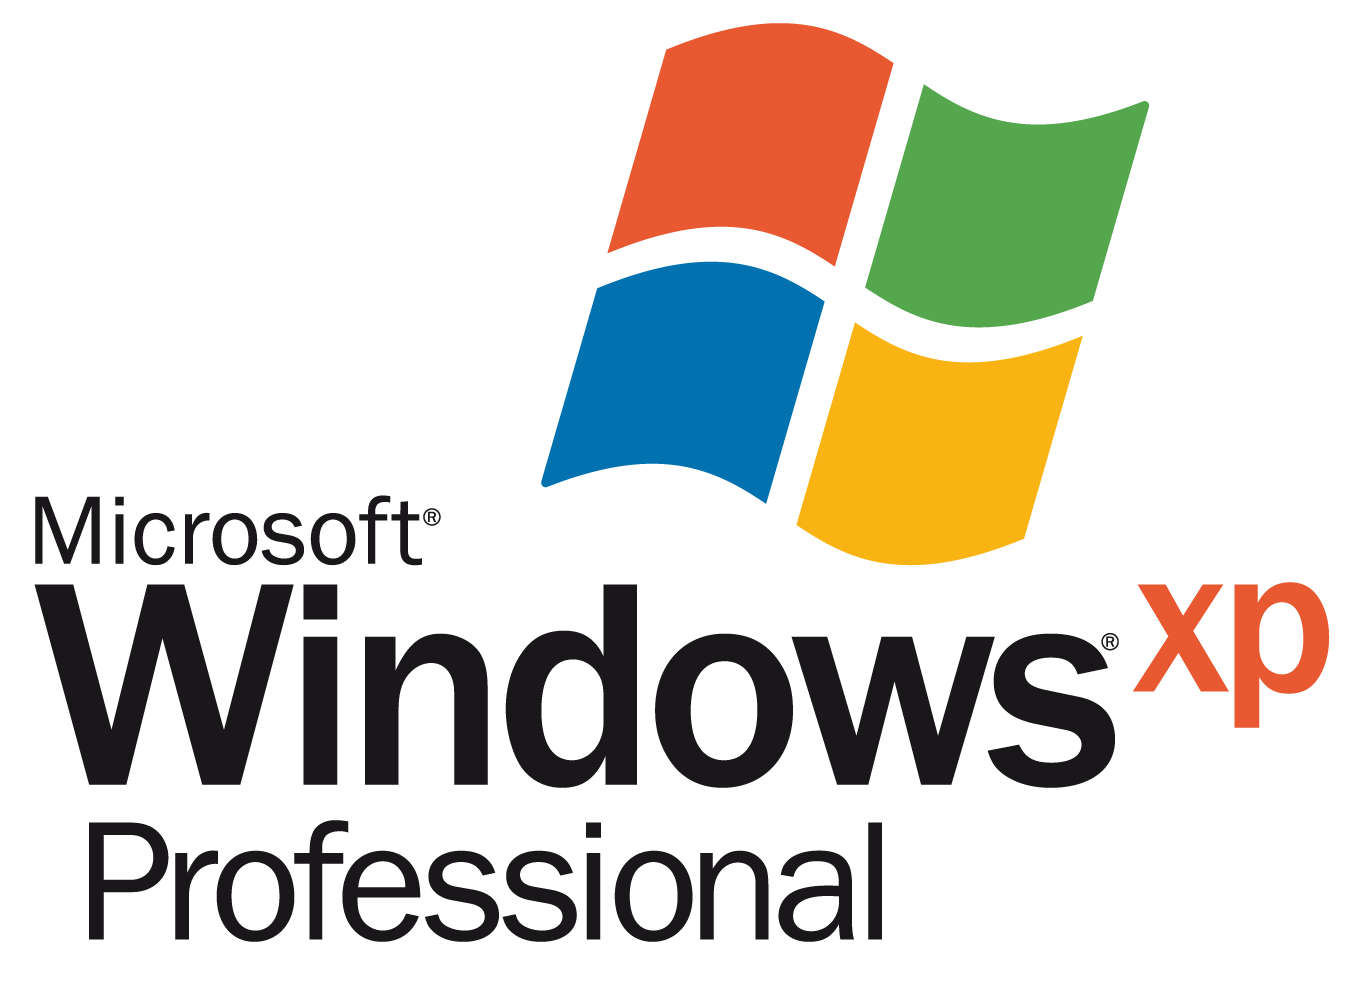 Vista Windows System Operating File Xp Microsoft Clipart